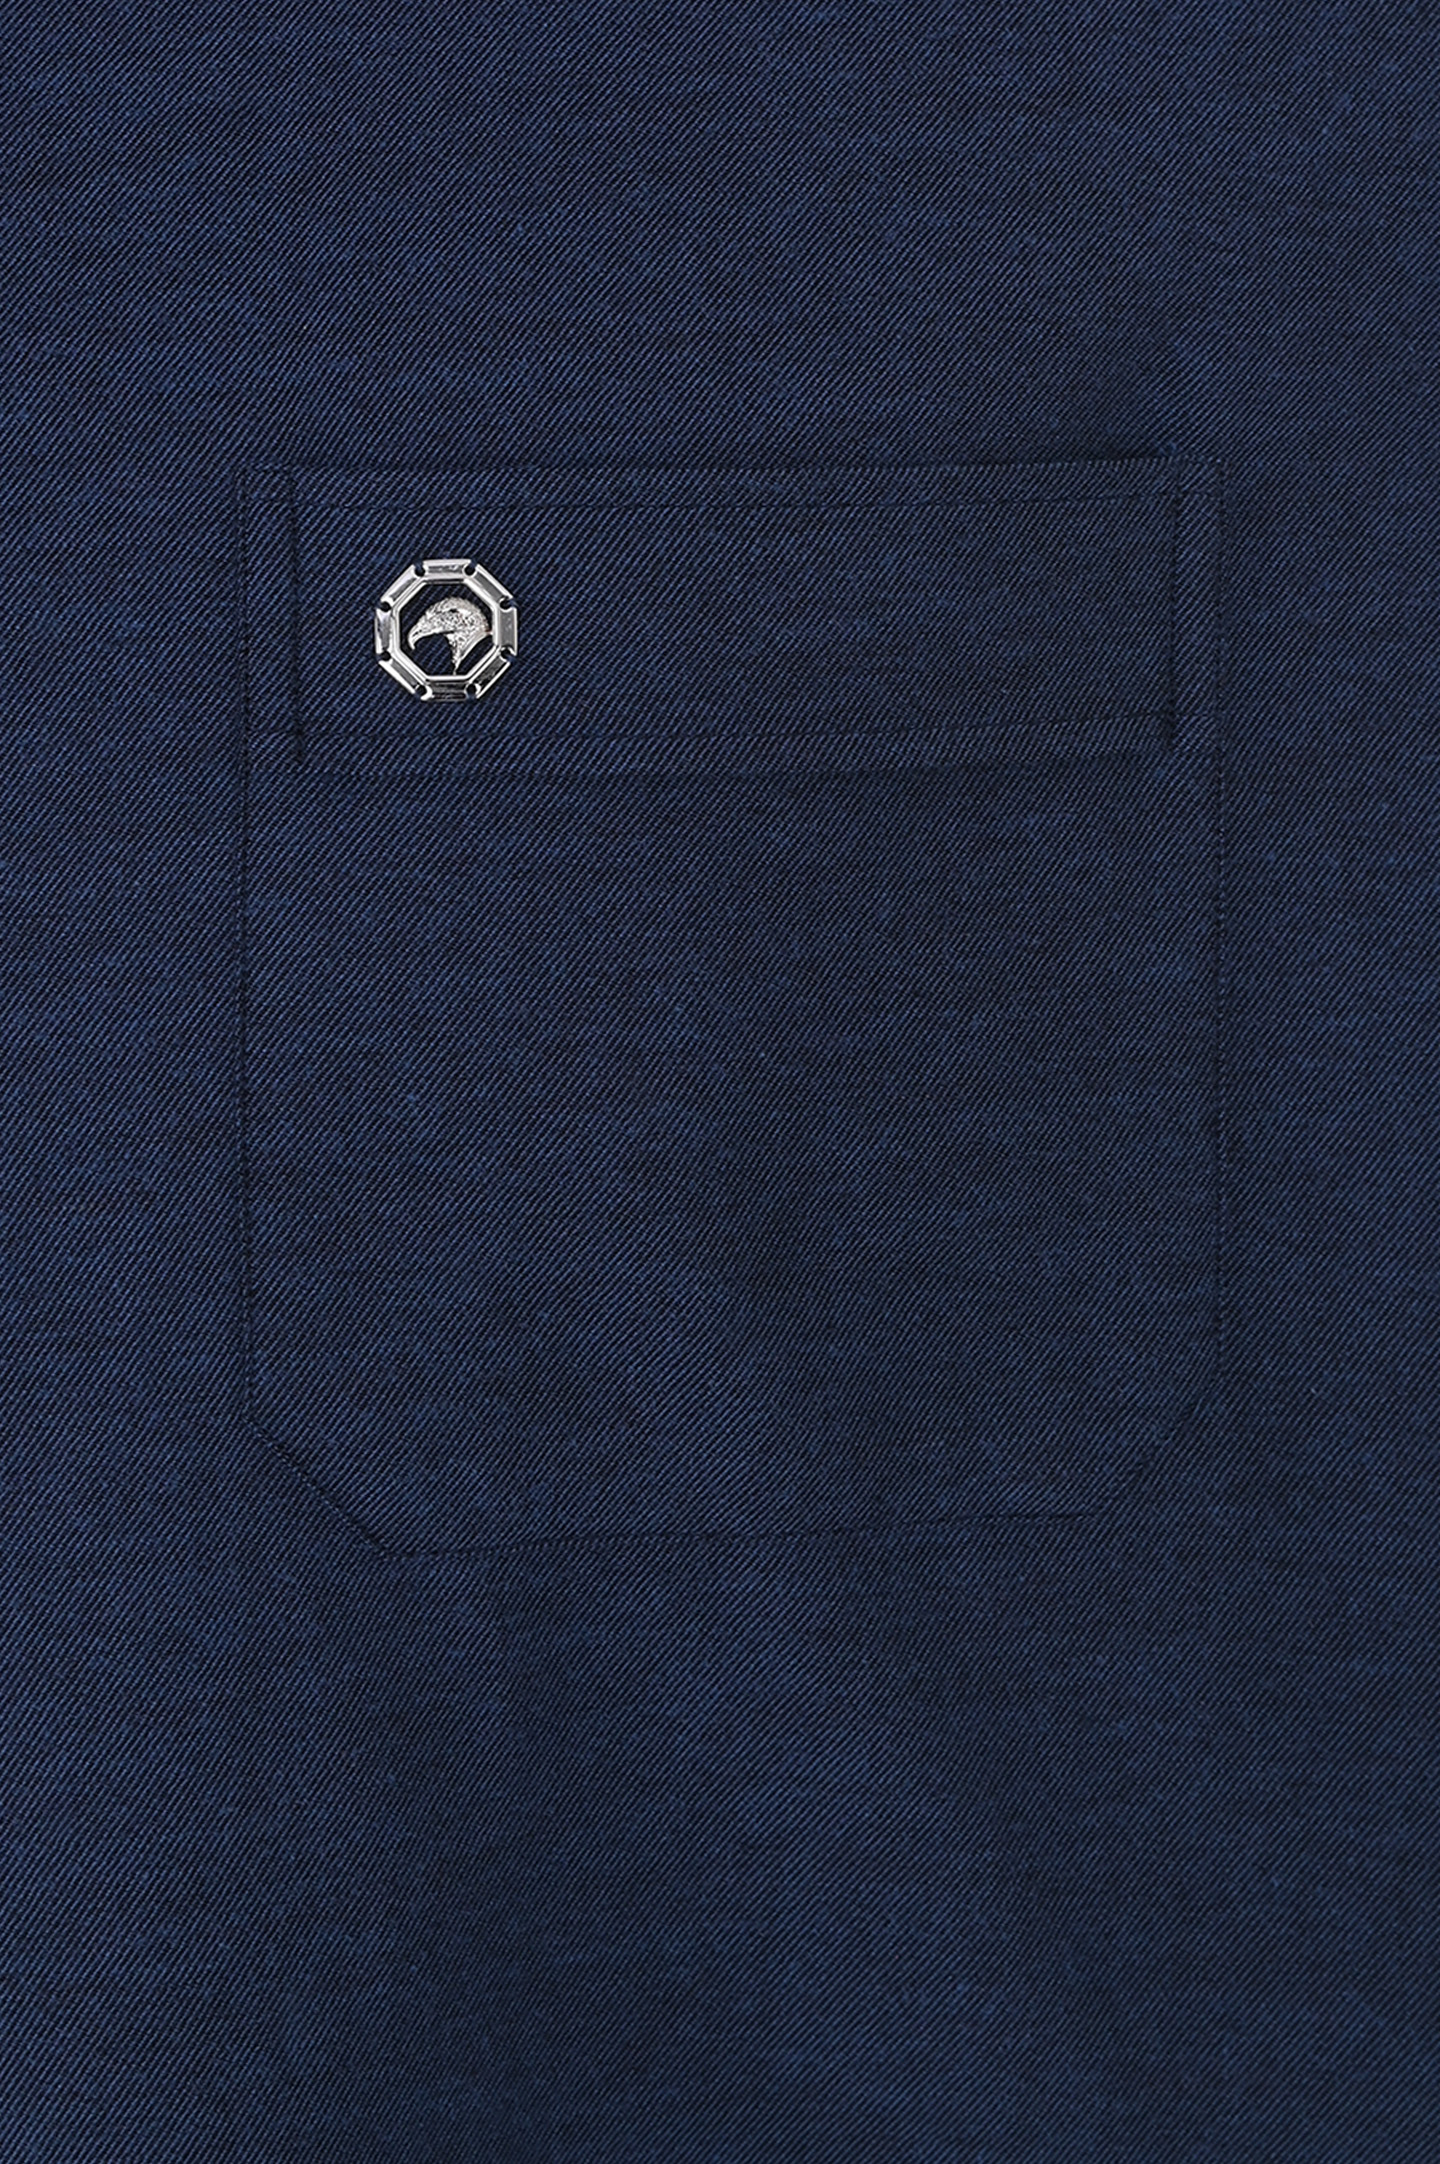 Рубашка STEFANO RICCI MC004291 S2600, цвет: Темно-синий, Мужской